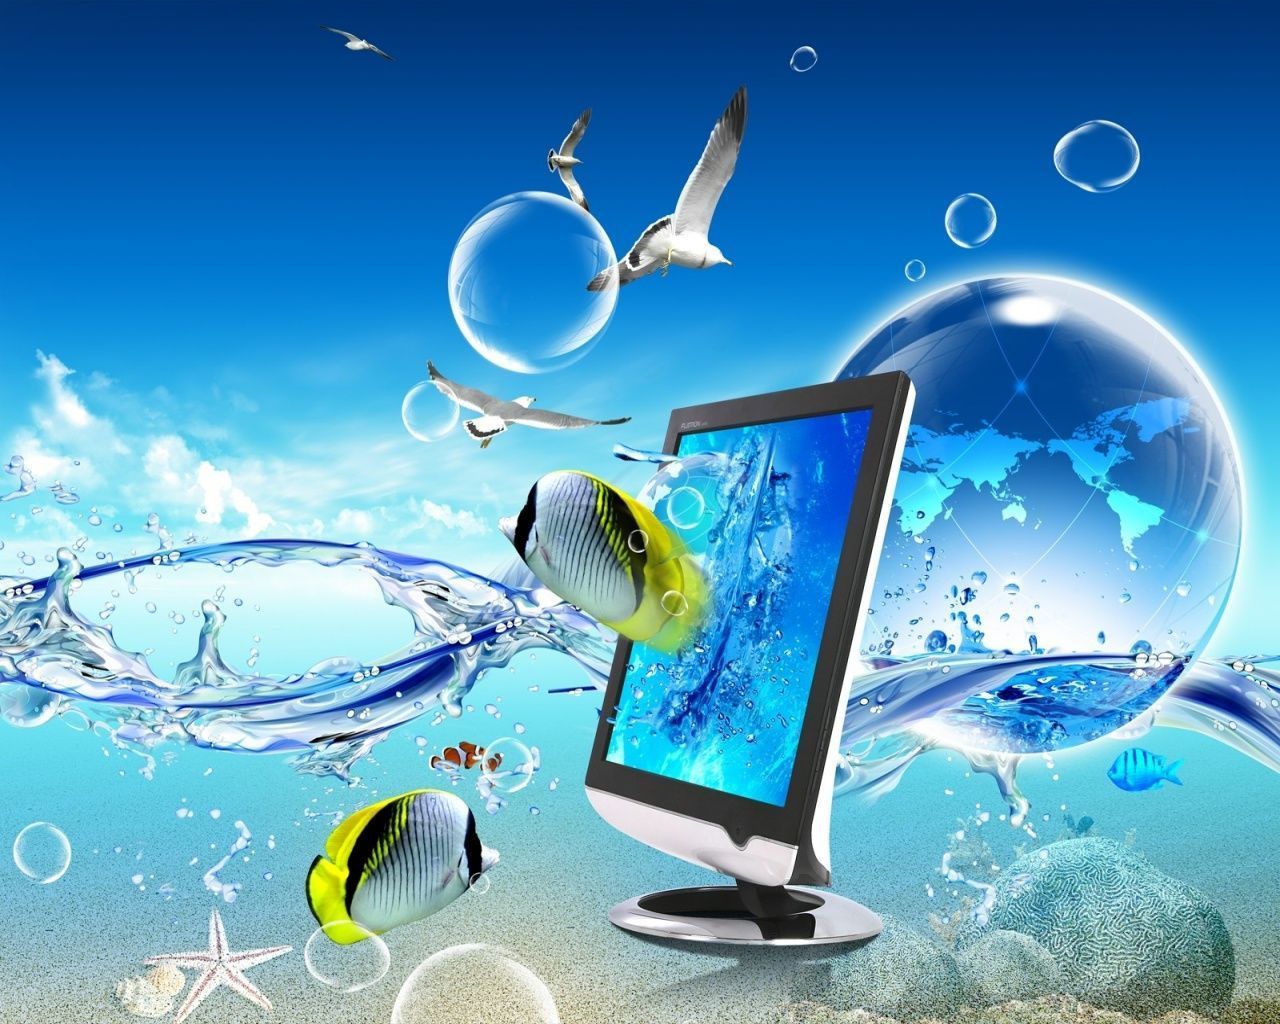 1280x1024 Abstract underwater desktop PC and Mac wallpaper